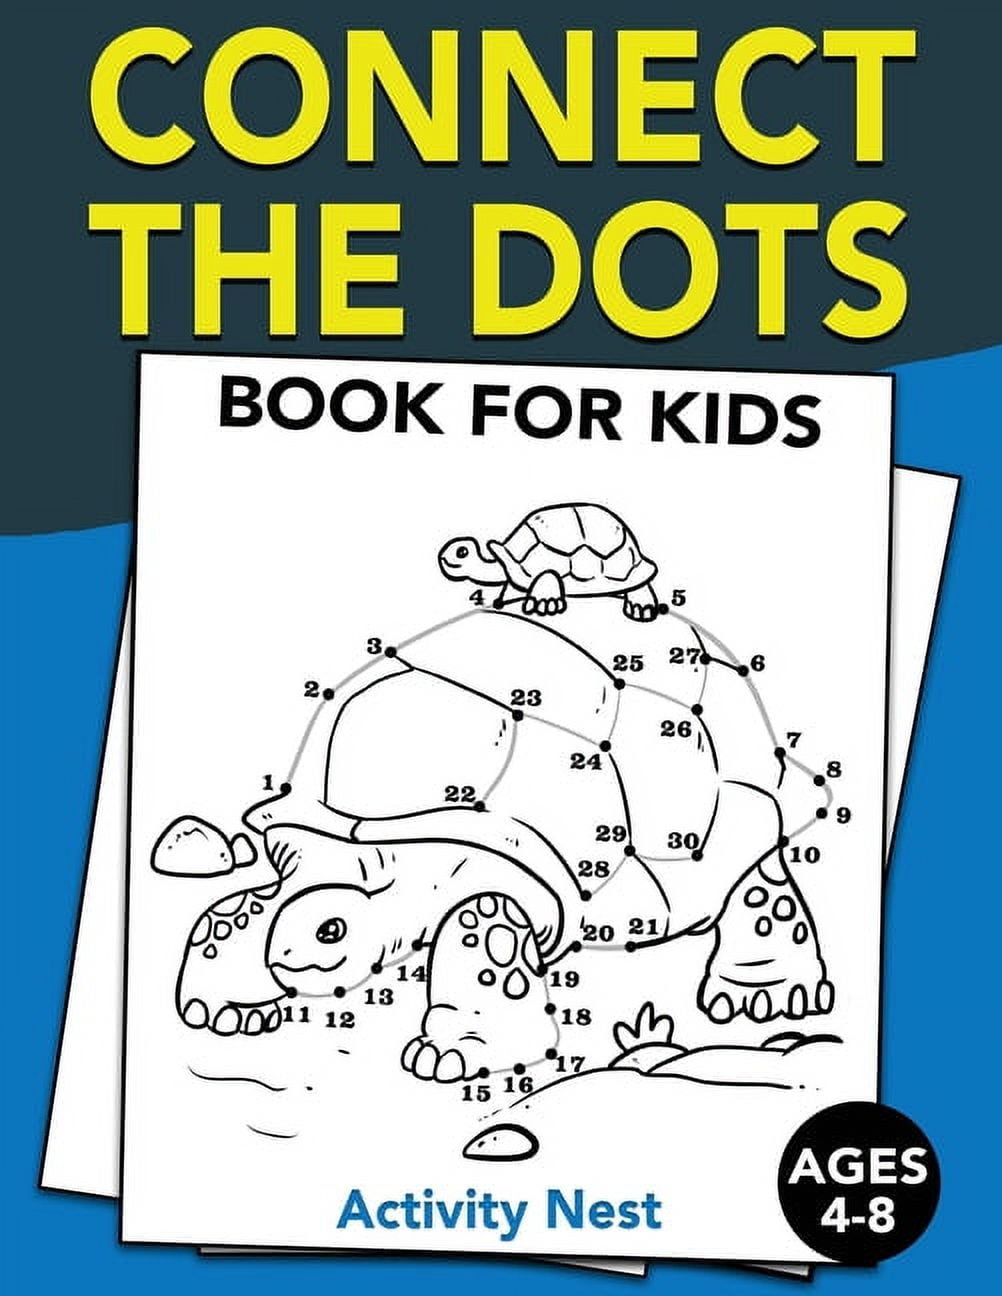 Dot to Dot for Kids Ages 4-8 Princess: Dot to Dot for Kids Ages 4-8  Princess , Fun Connect The Dots Books for Kids Ages 3-5, 4-6, 6-8, 7-9,  8-12 Color (Paperback)